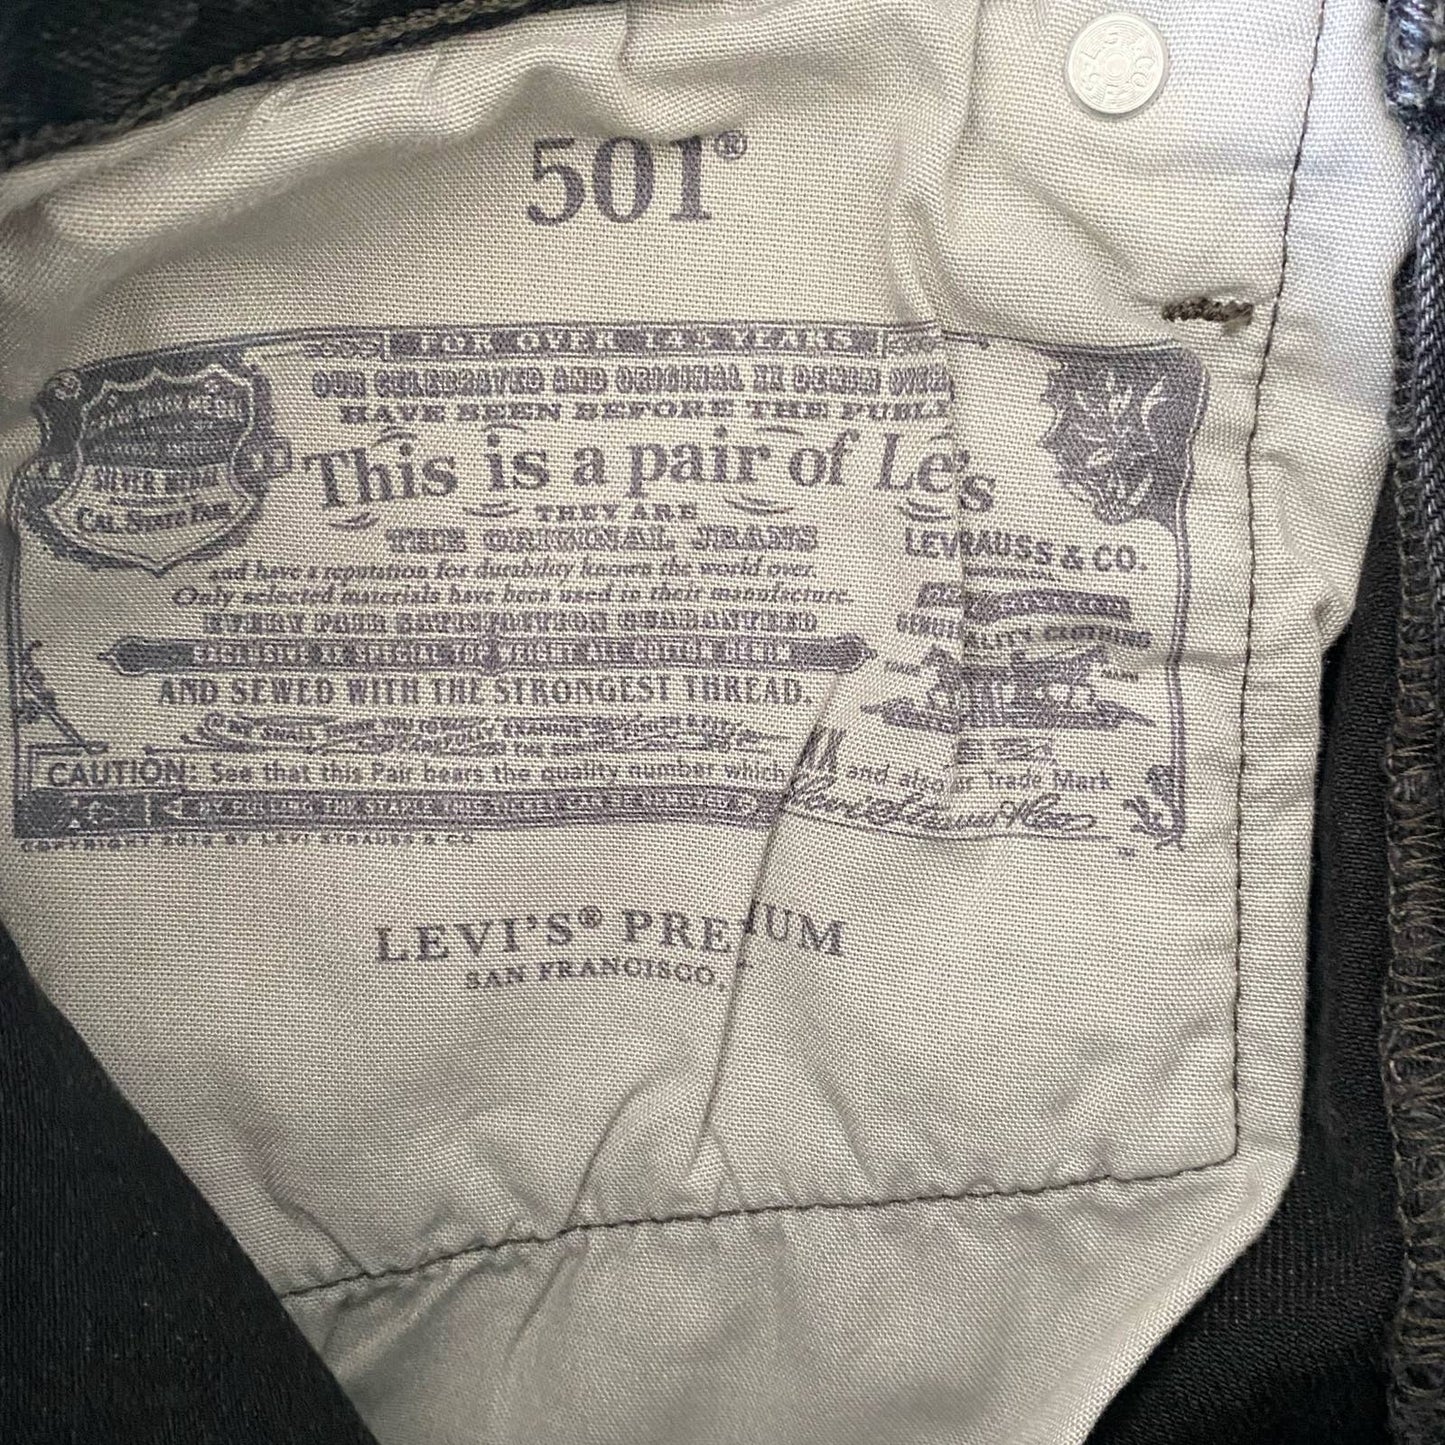 Levi's Premium 501  sz 26 cut off jean shorts